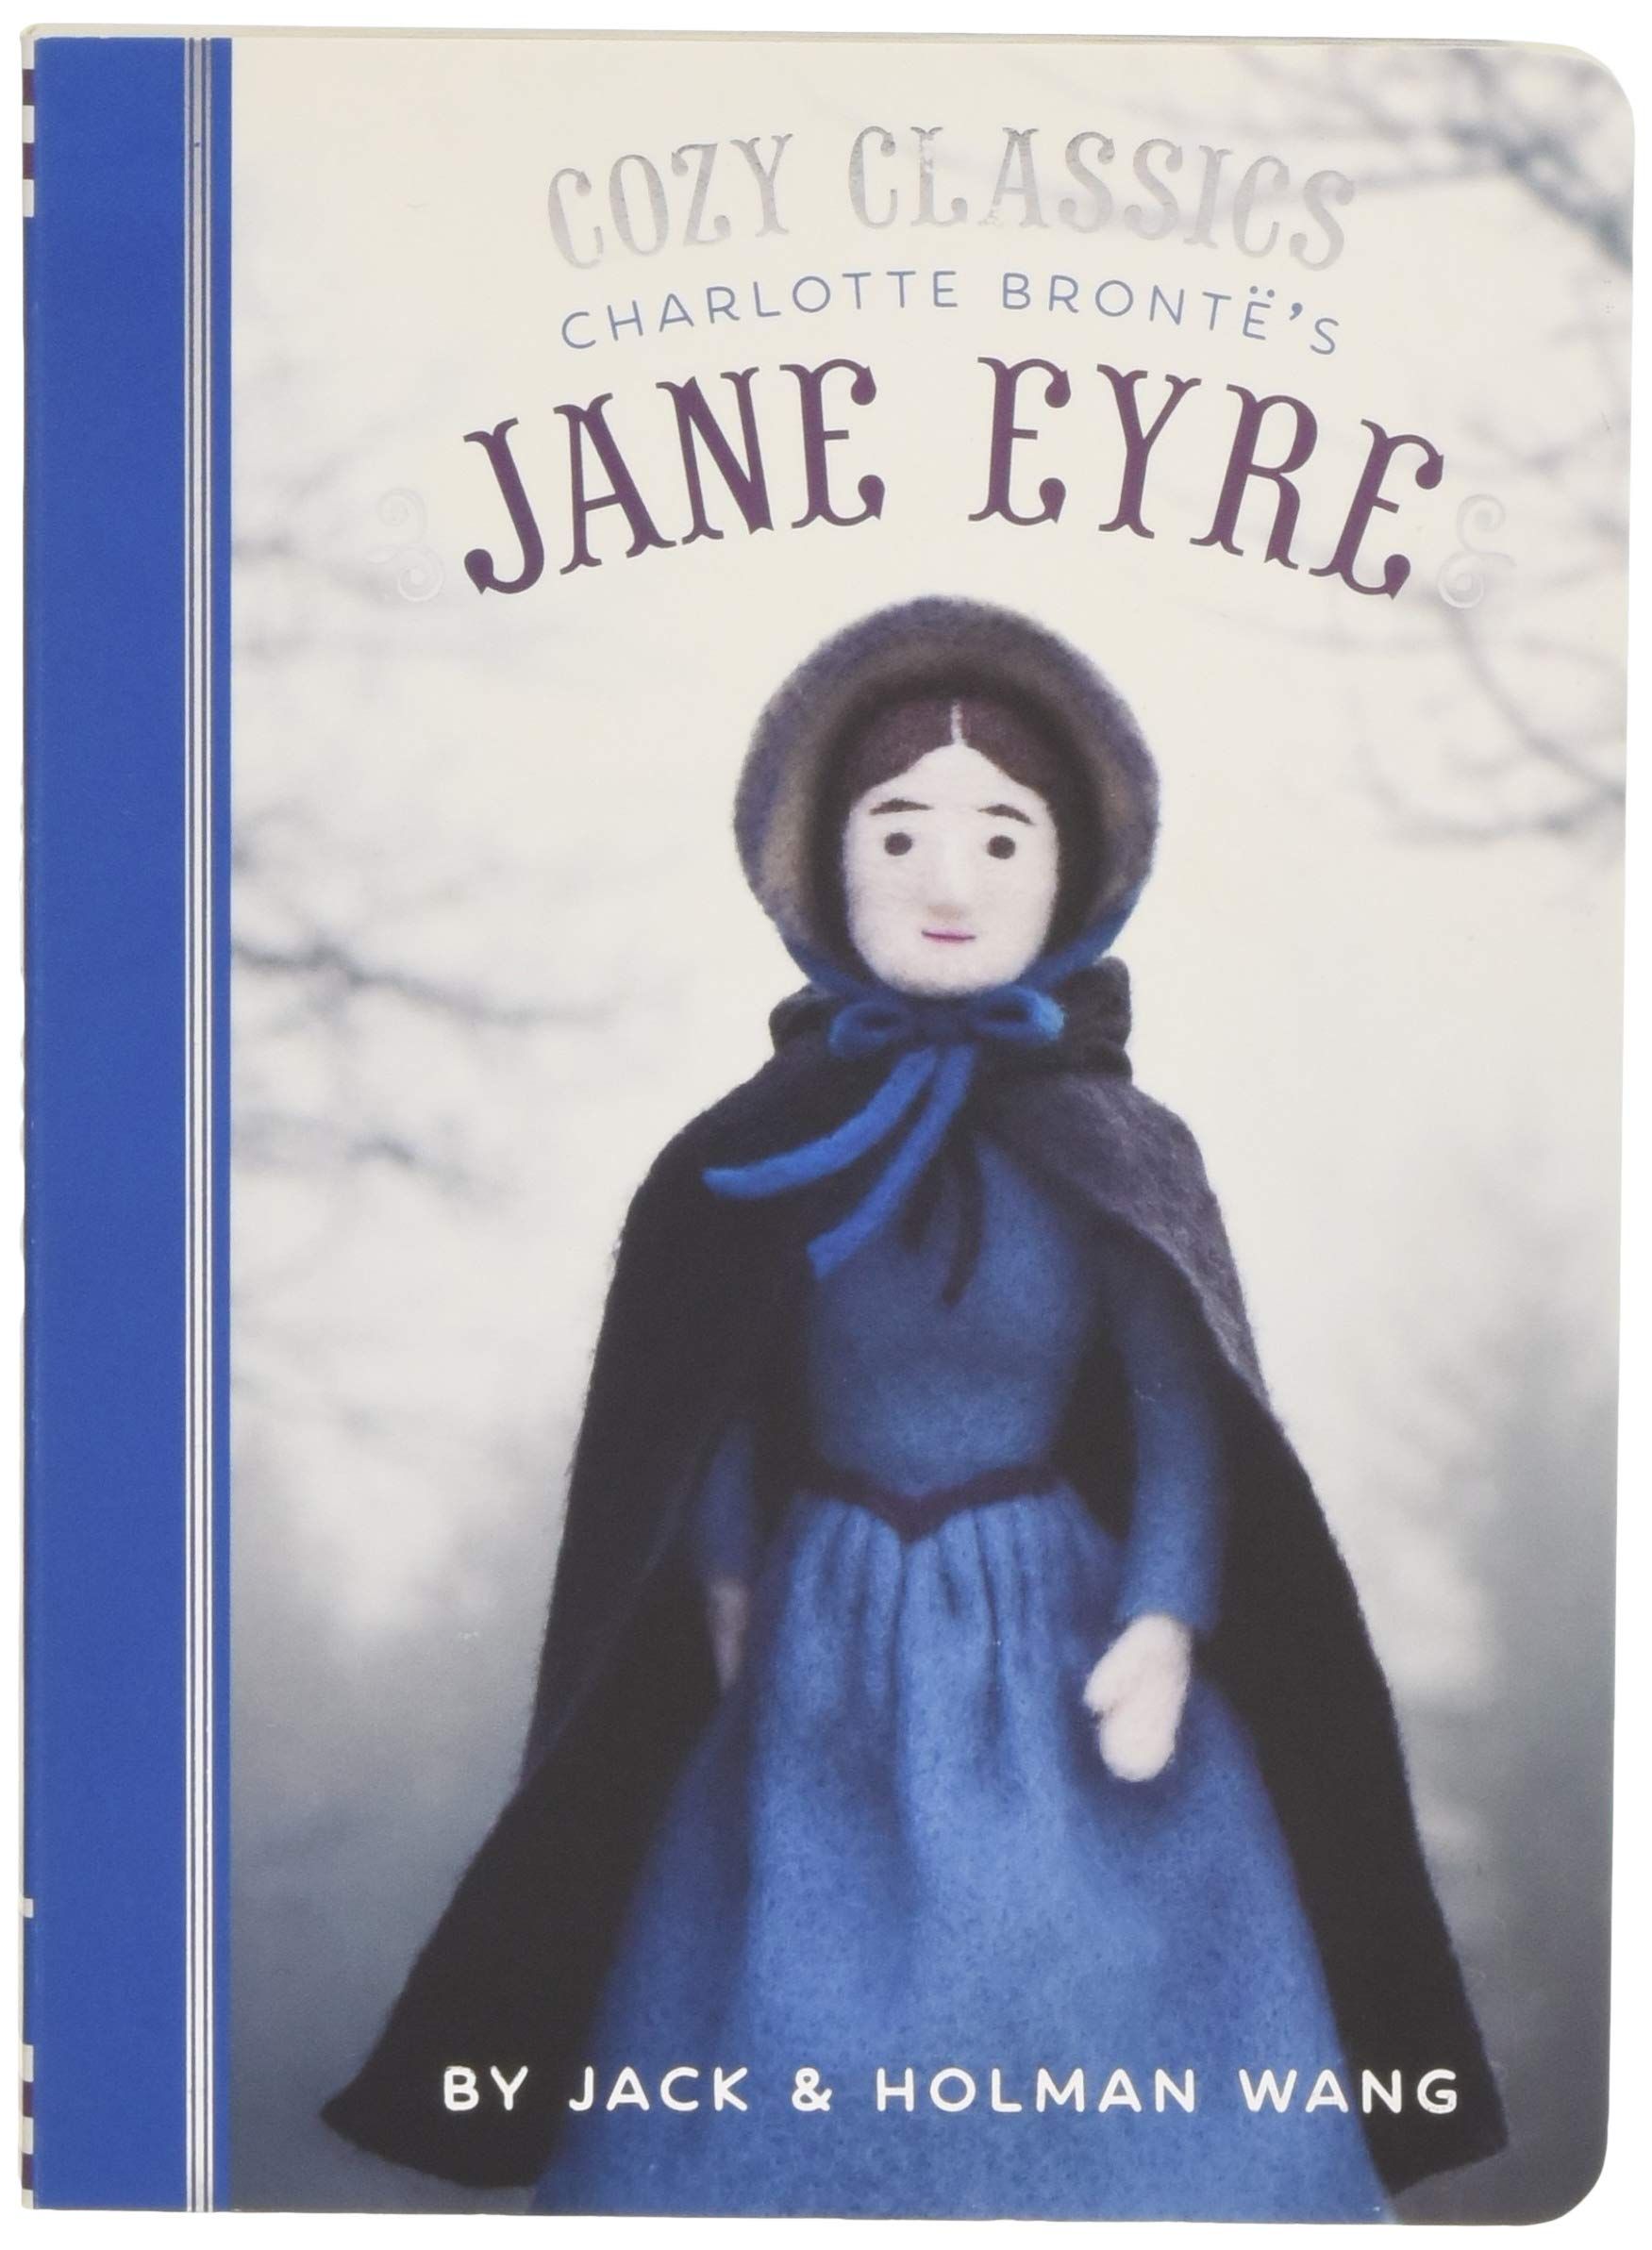 Jane Eyre Cozy Classics cover image